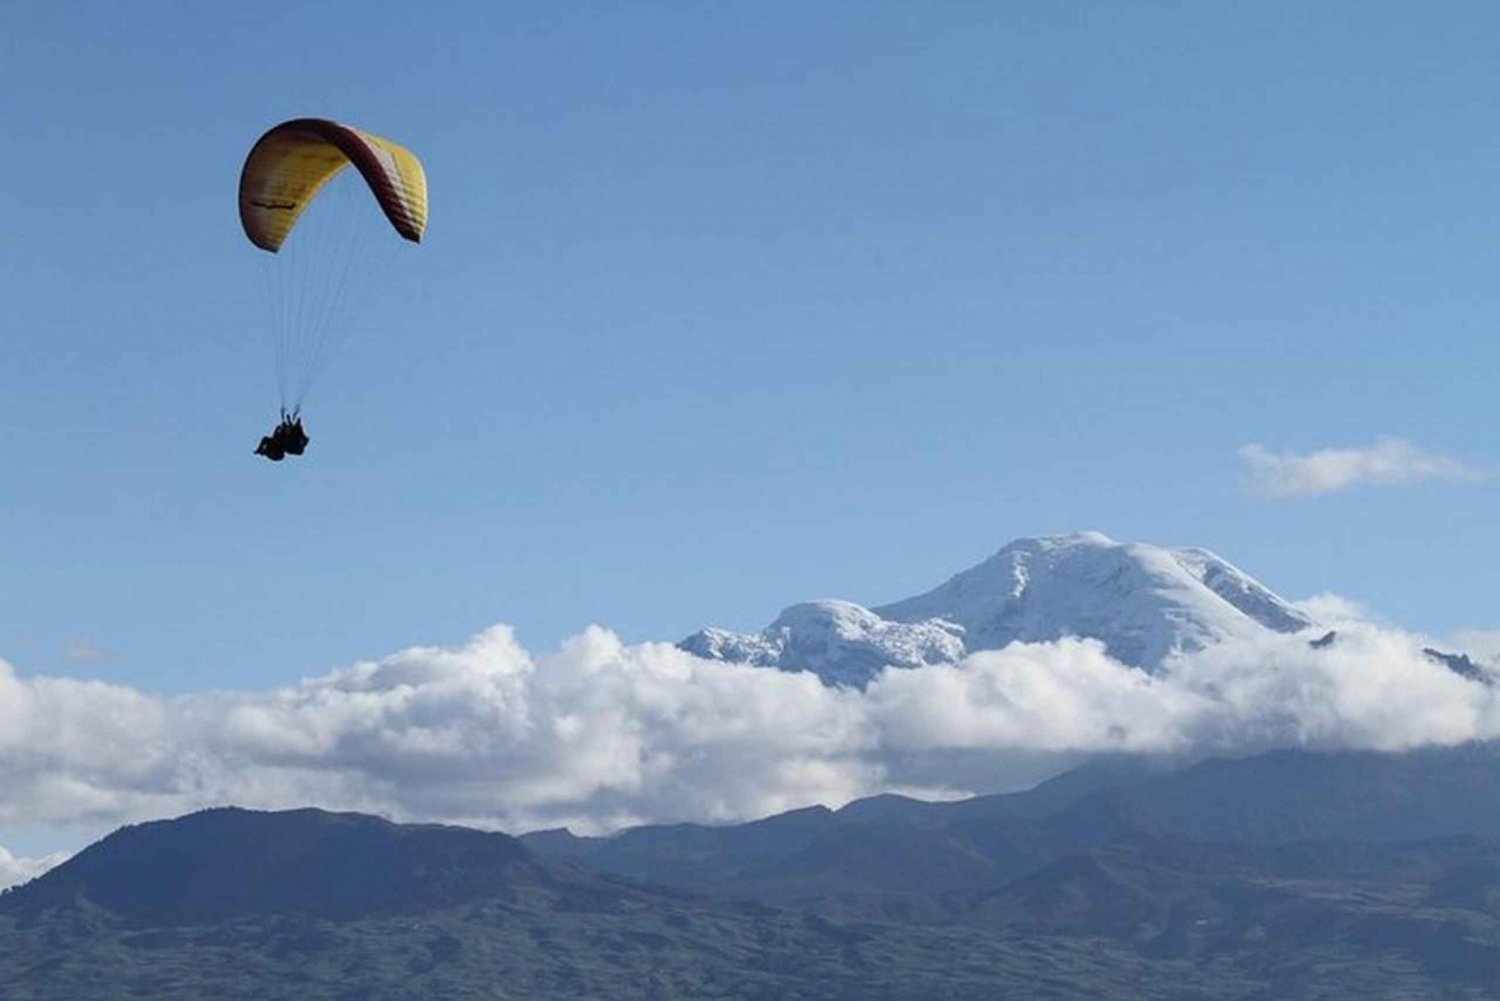 Baños : Vol tandem en parapente avec vue sur les Andes